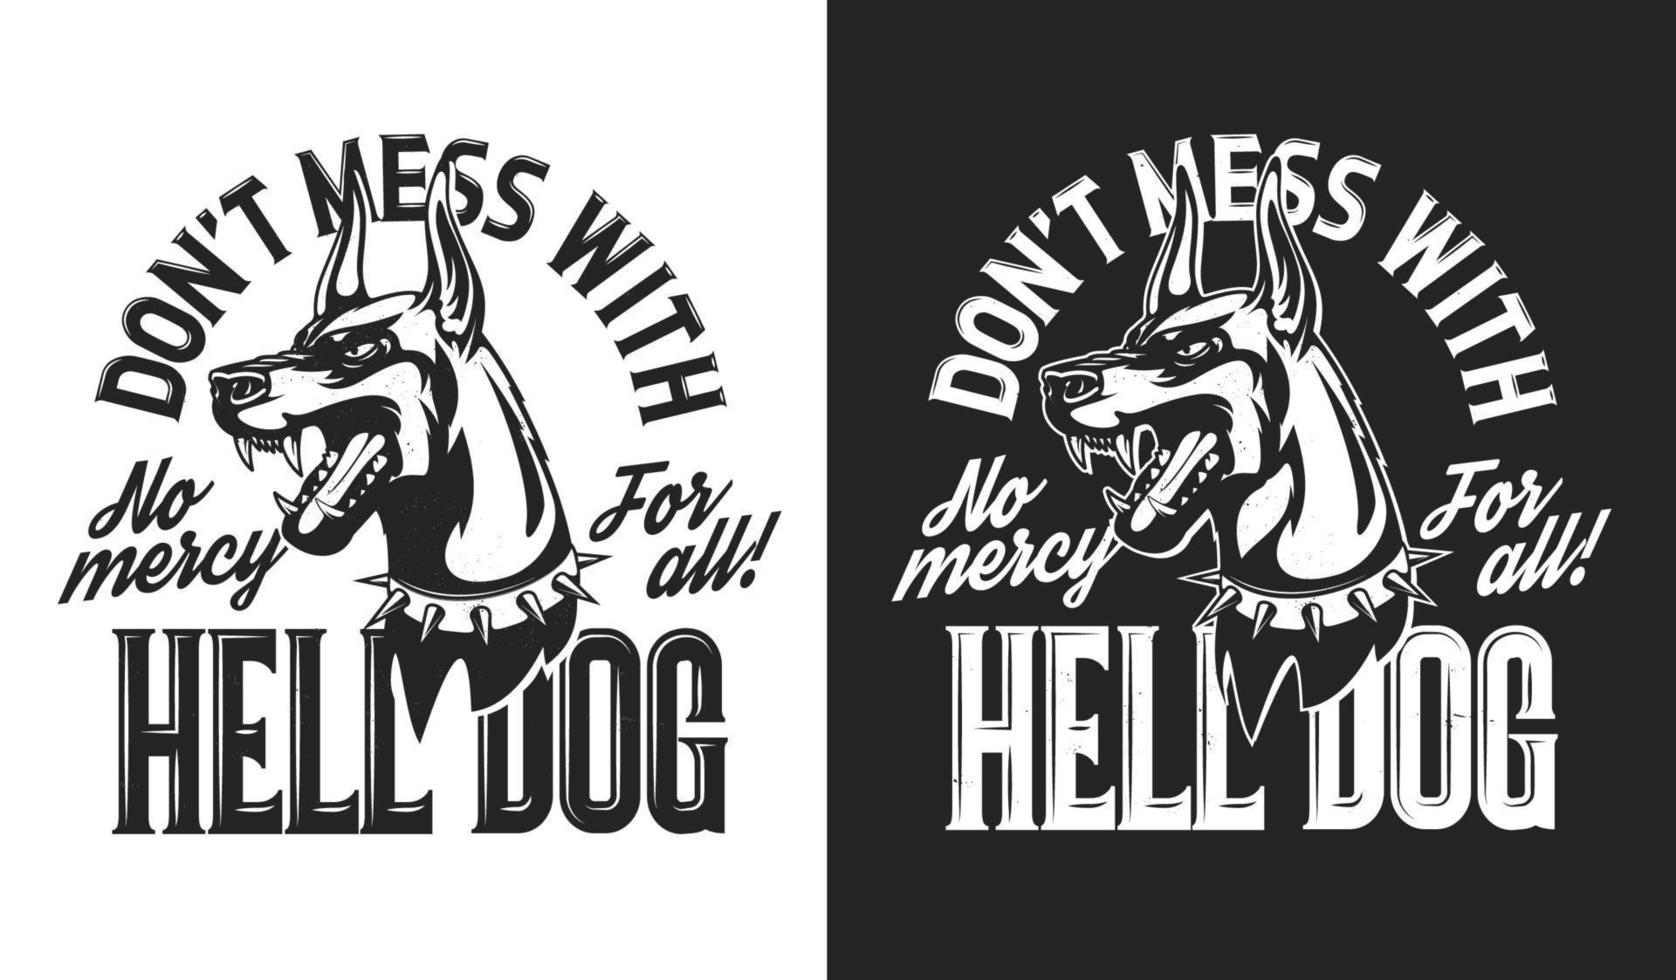 Bravo doberman cachorro, animal mascote camiseta impressão vetor